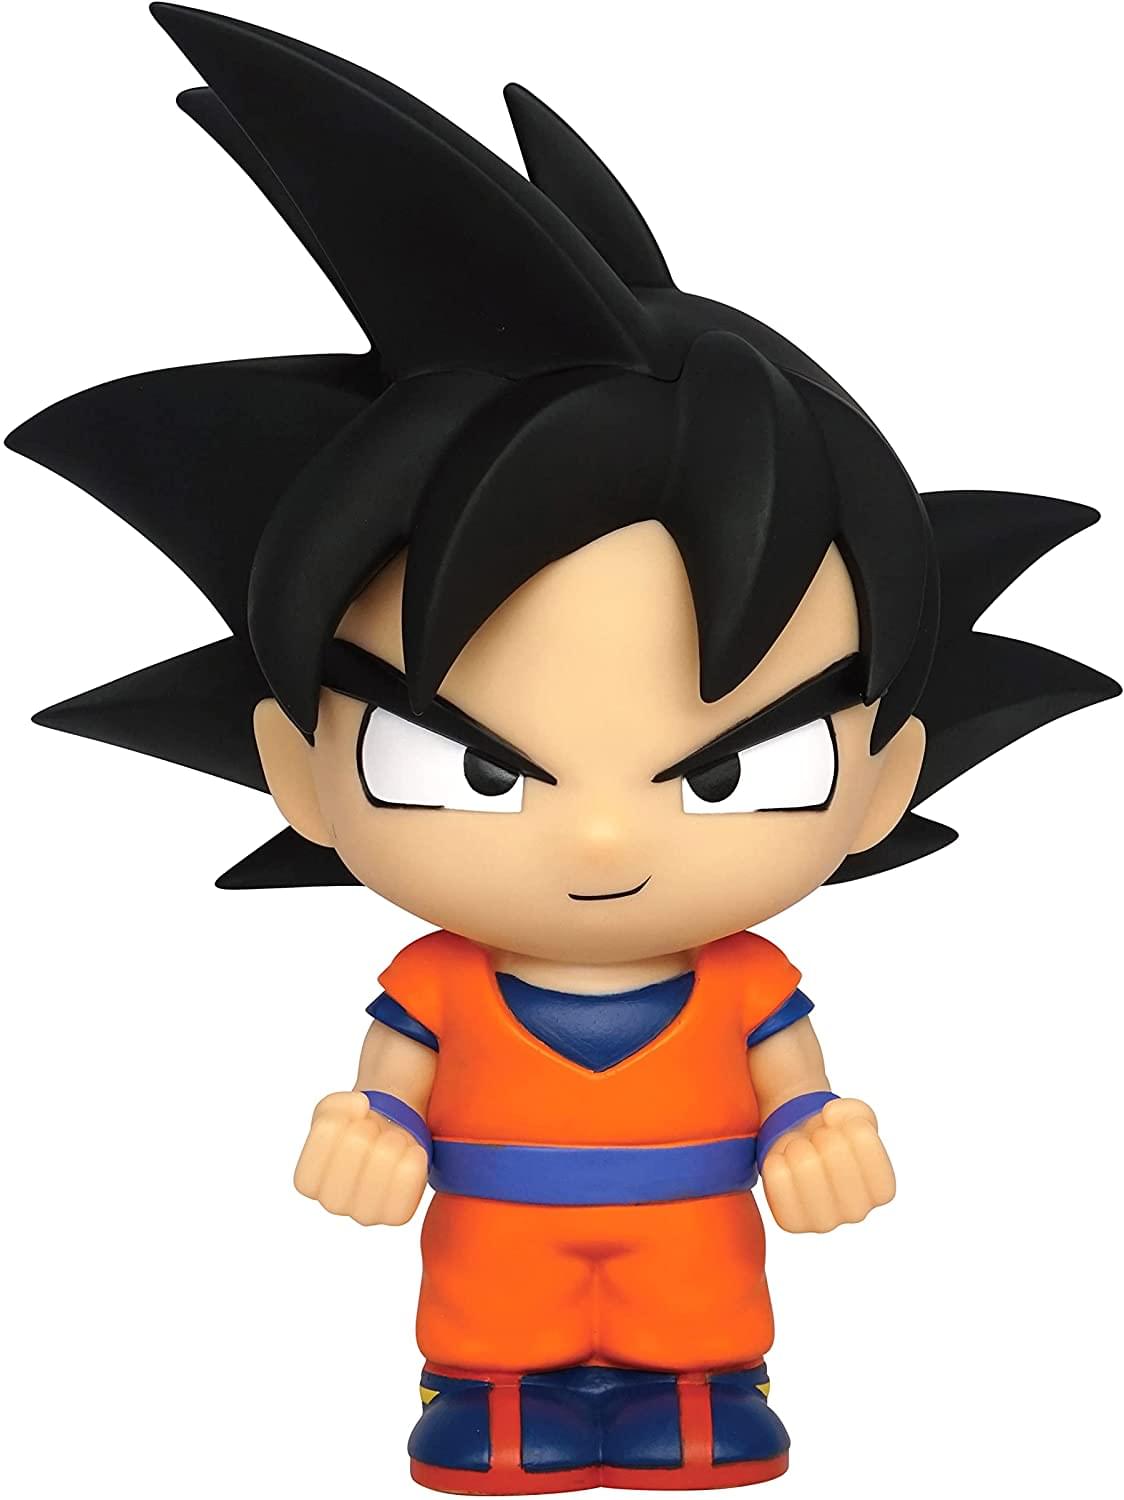 Dragon Ball Z Goku 8 Inch PVC Figural Bank